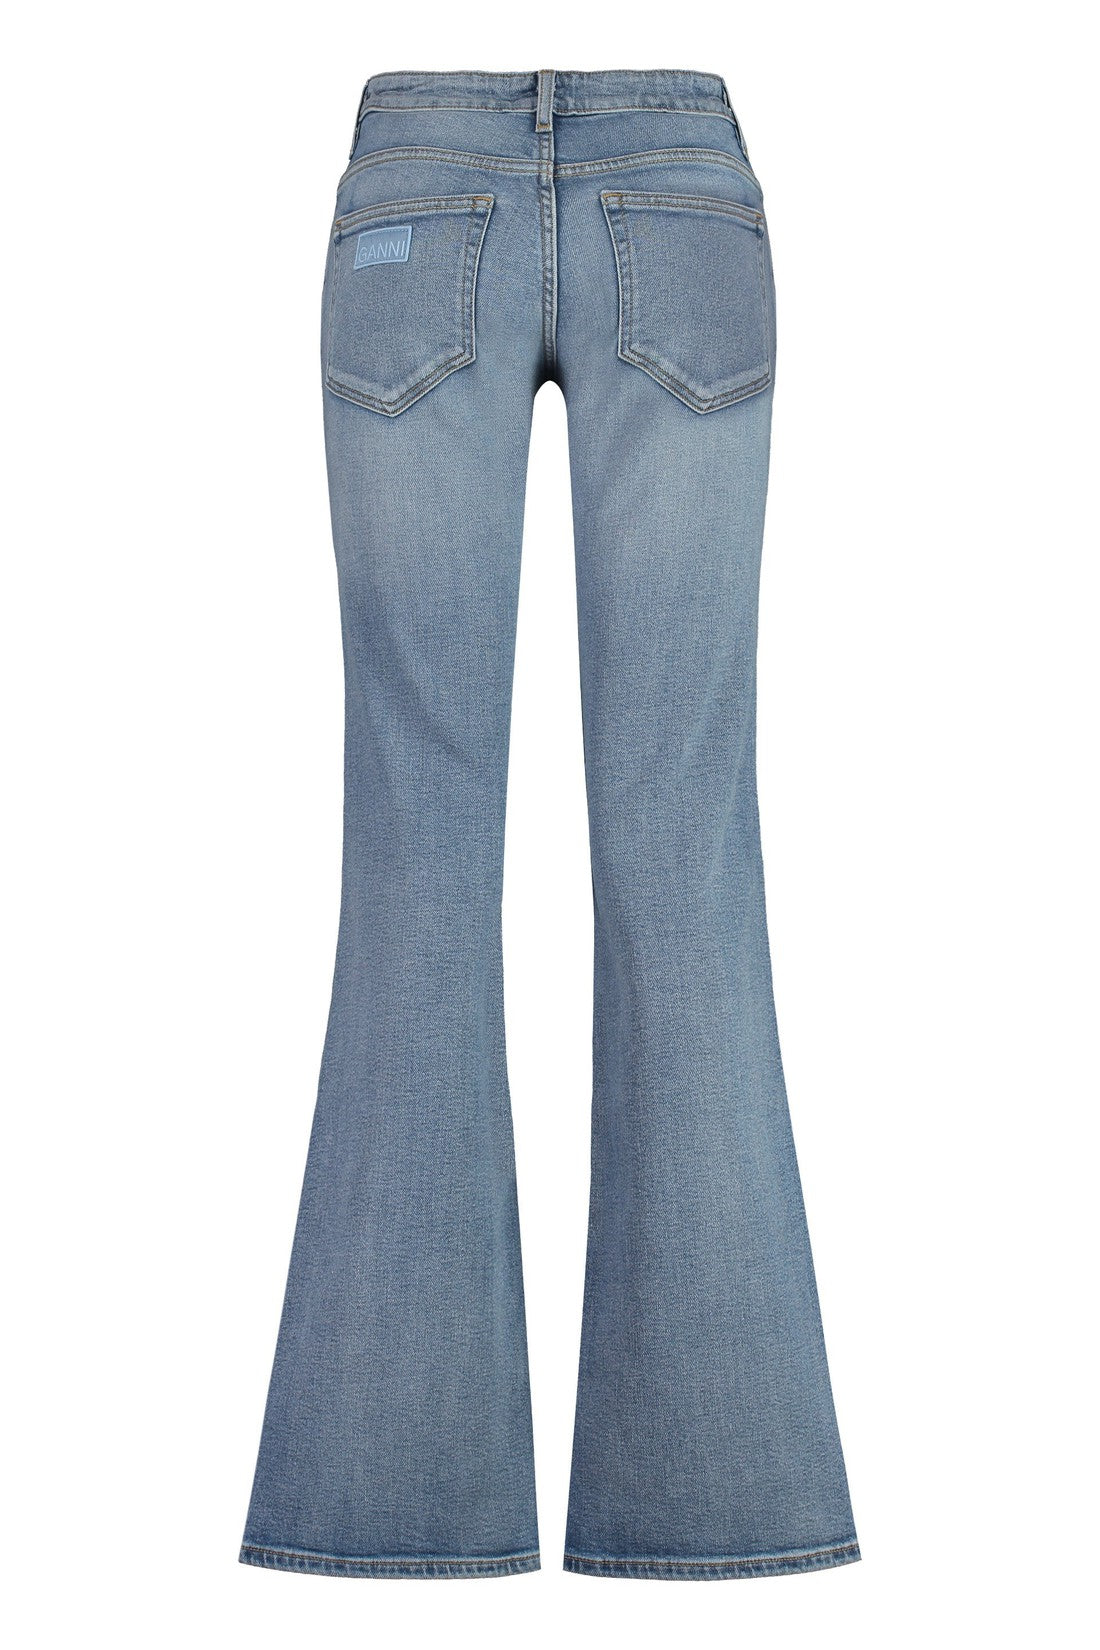 GANNI-OUTLET-SALE-5-pocket jeans-ARCHIVIST